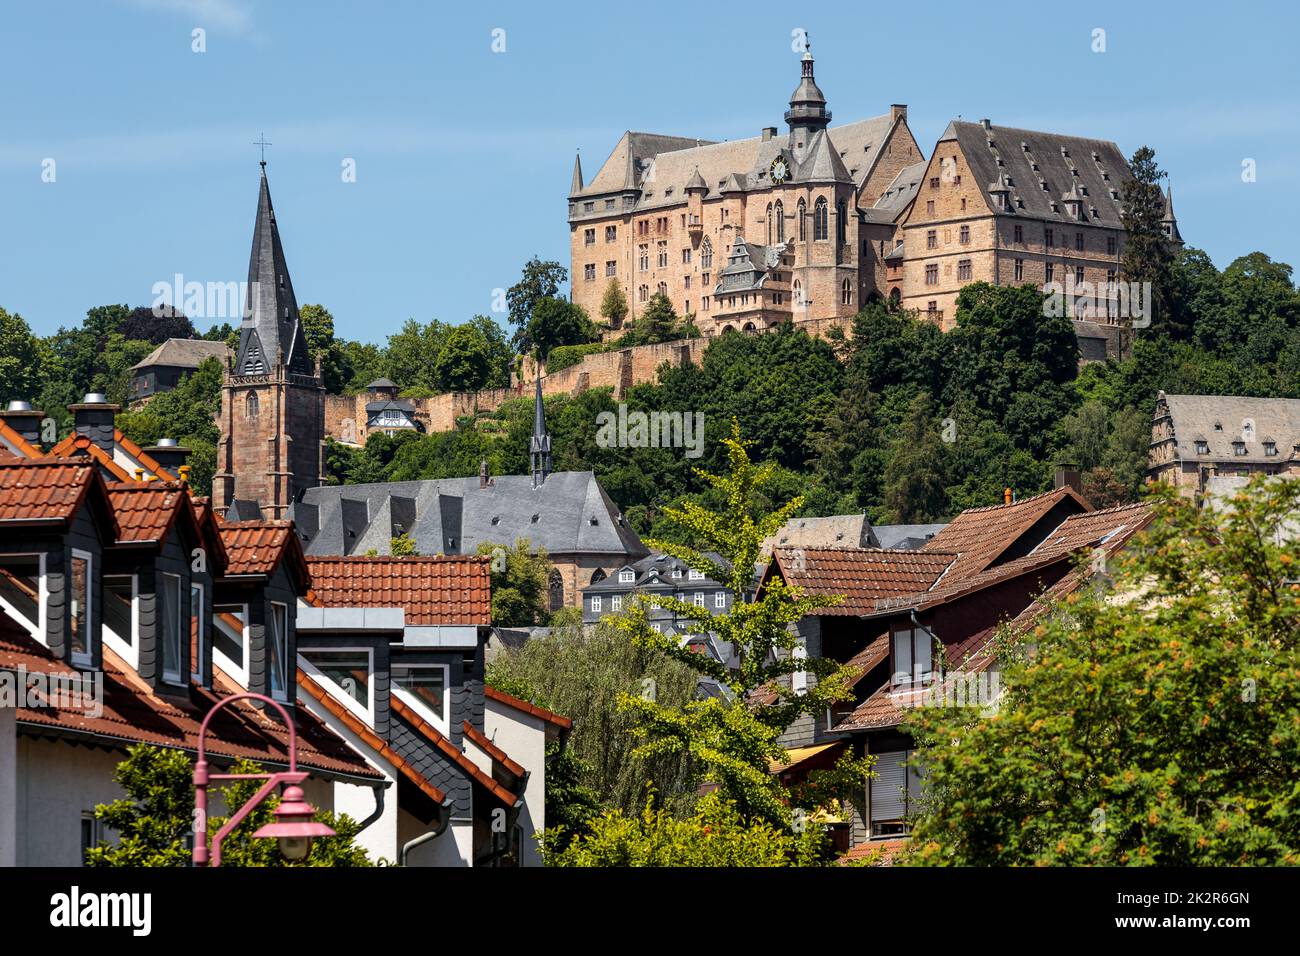 Marburg castle, also called Landgrave castle or Landgrafenschloss, above the historic old town of Marburg, Hesse, Germany Stock Photo